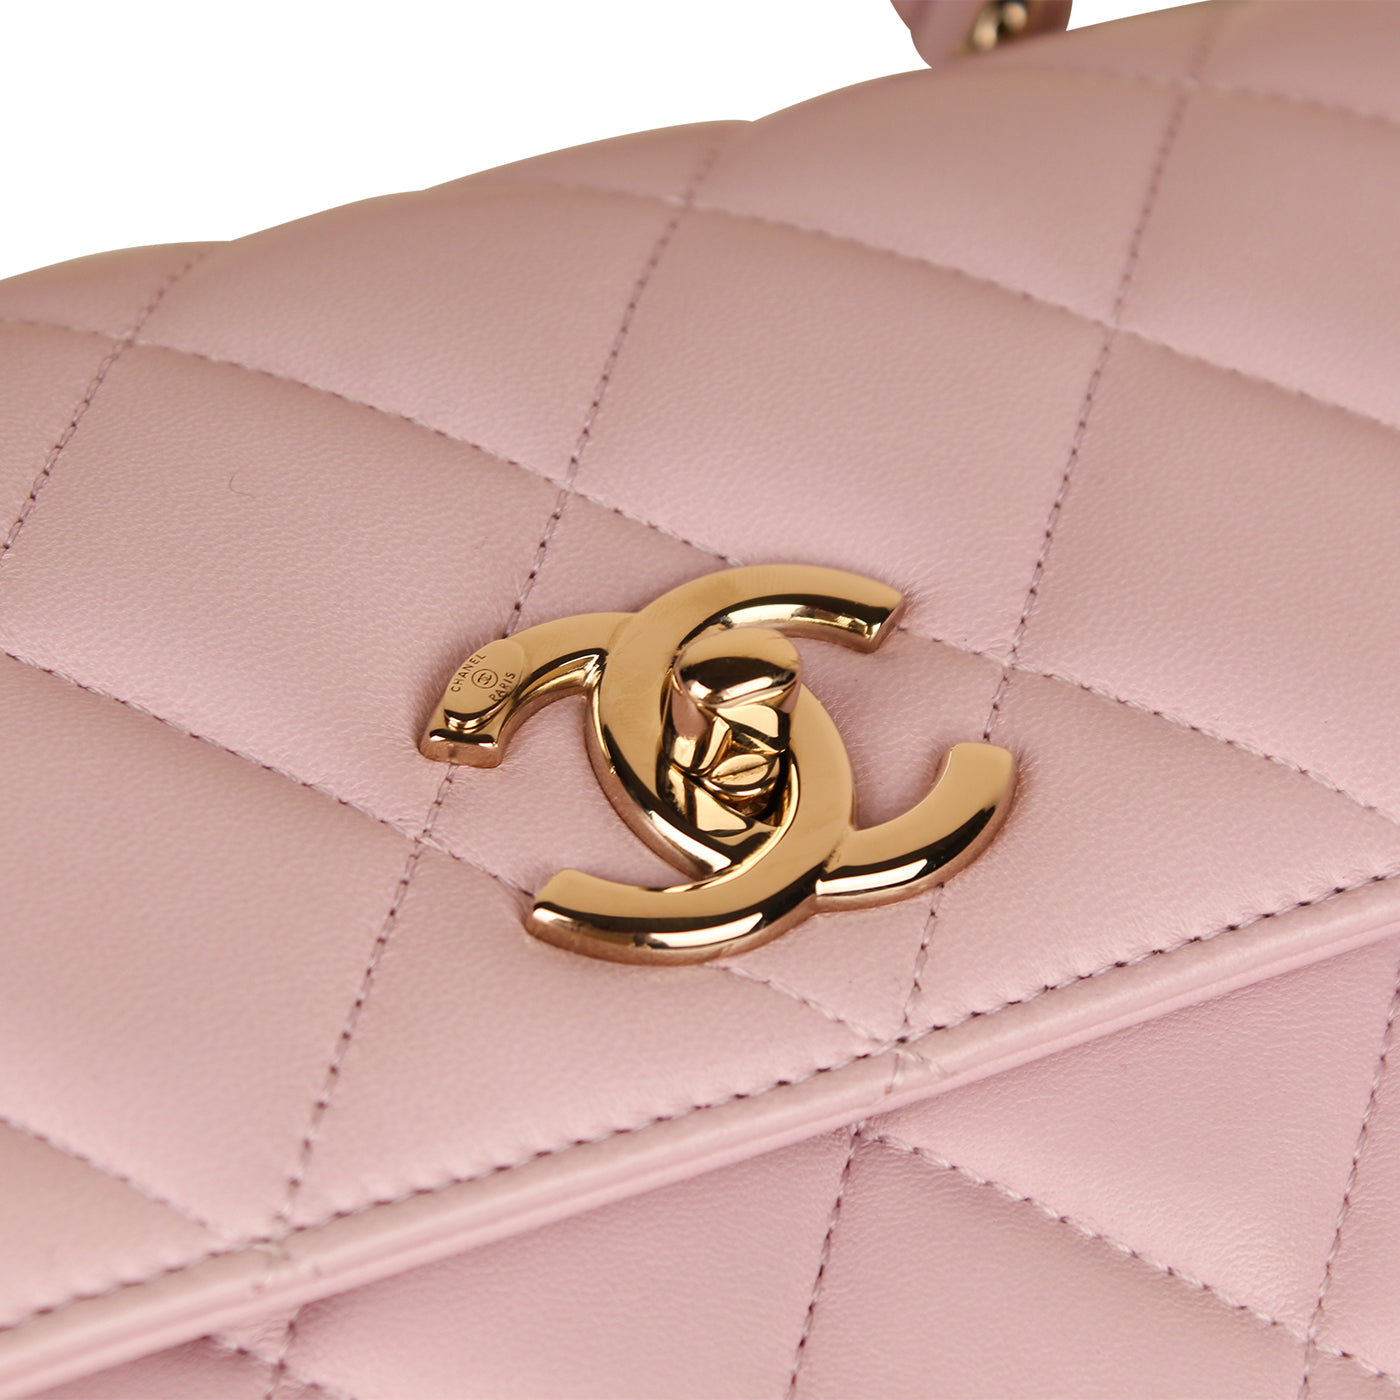 Chanel - Small Trendy CC Flap Bag - Pink/Lilac Lambskin